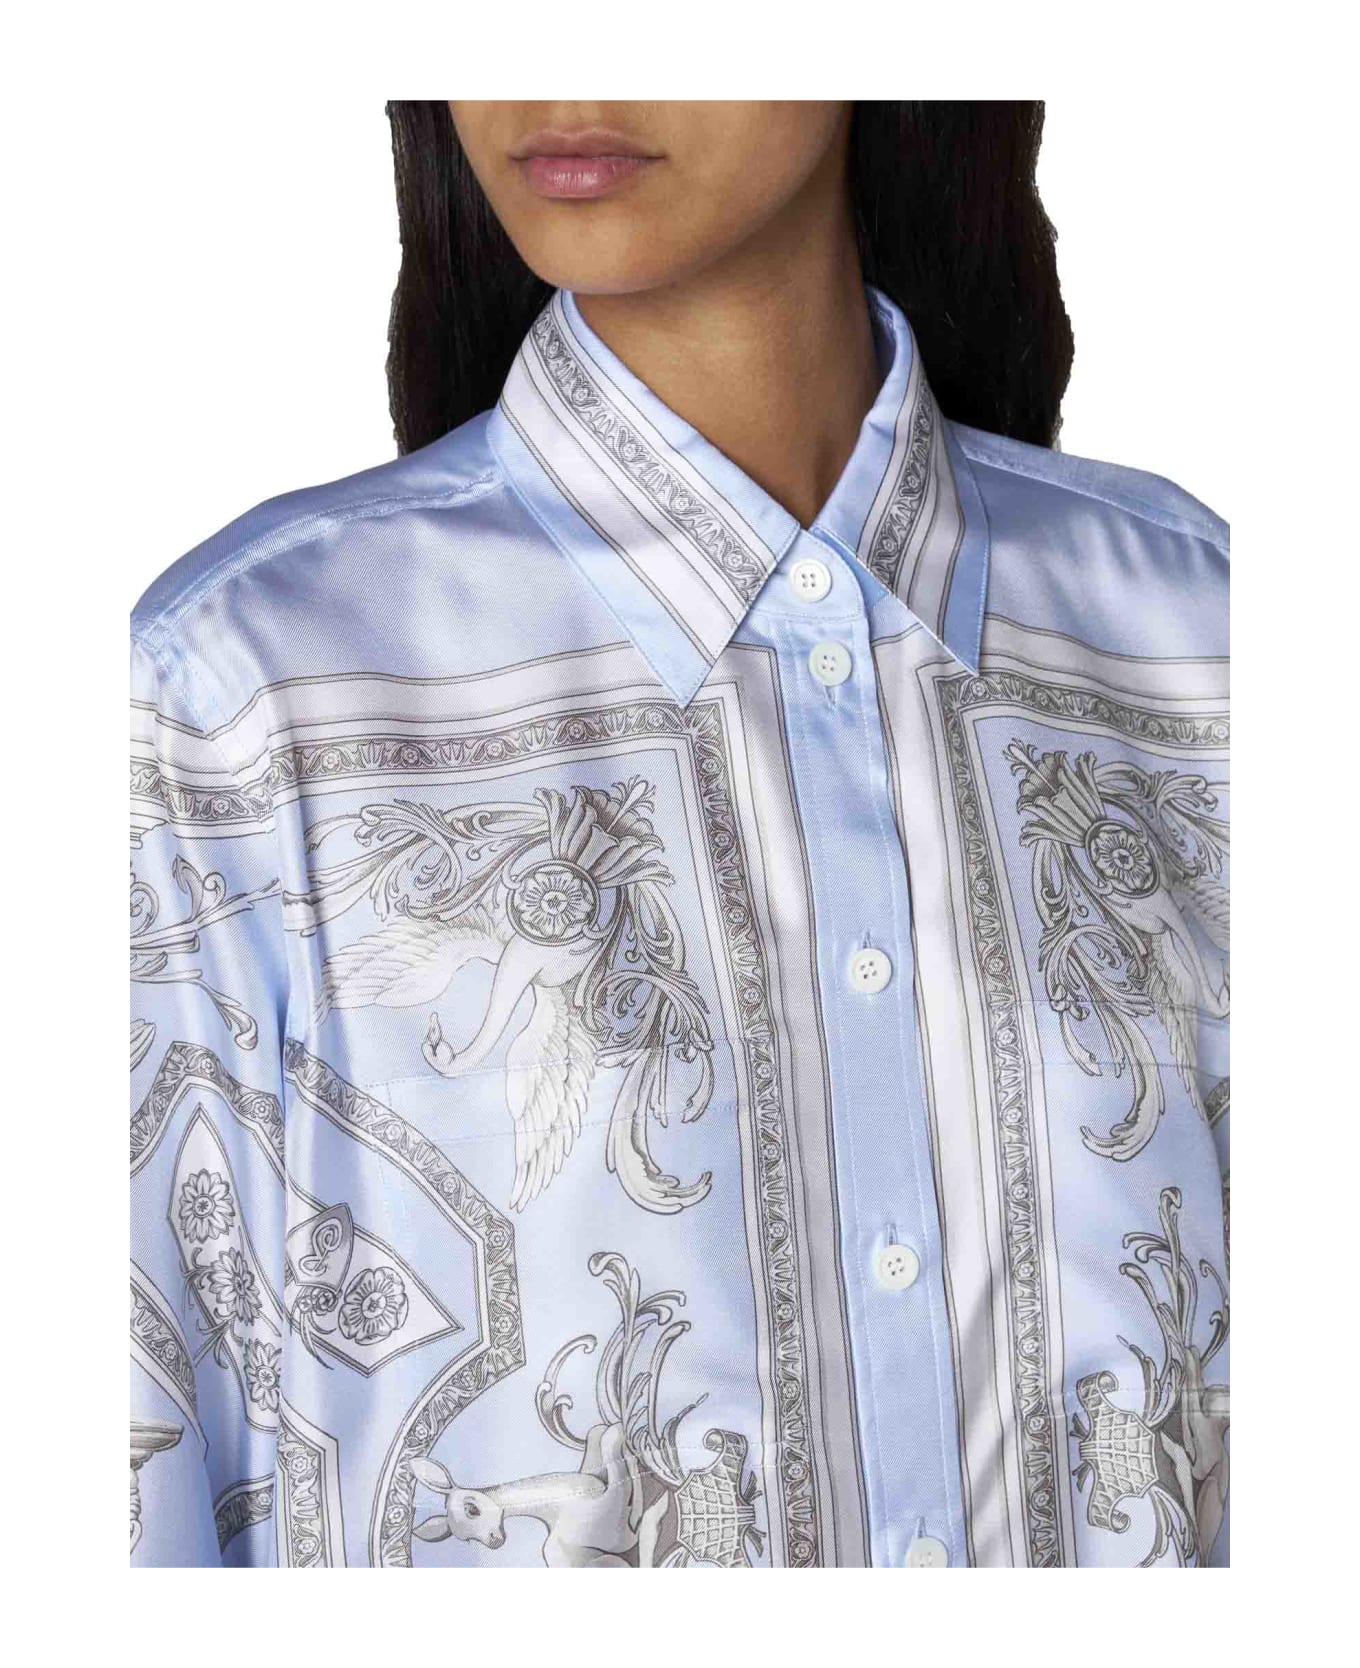 Burberry Ivanna Print Silk Shirt - Pale blue ip pat シャツ